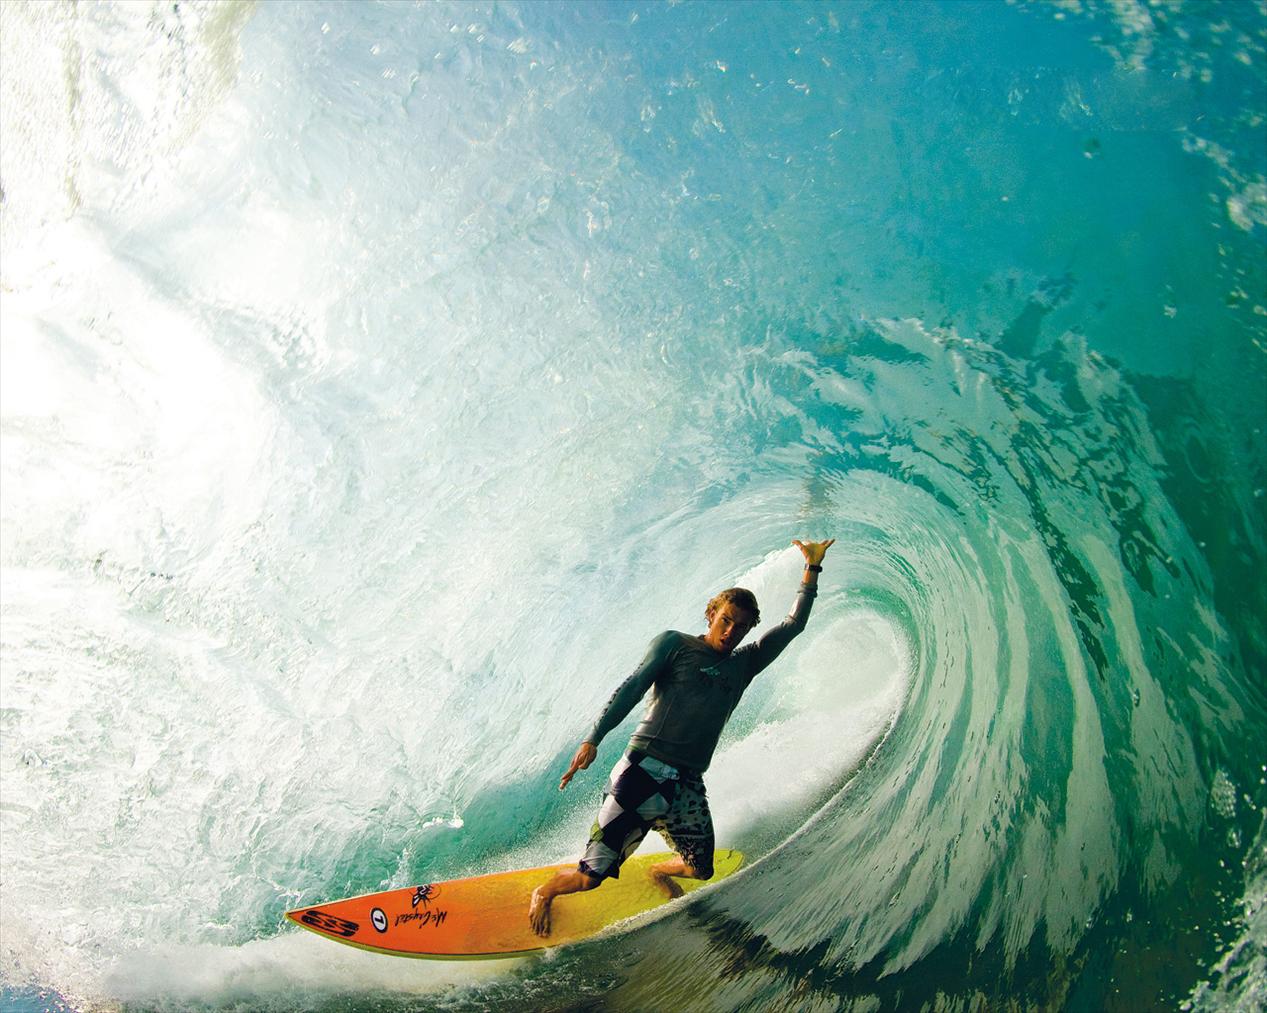 Big Waves Surfing 1920x1080 Wallpaper1920x1080 Wallpaper Screensaver